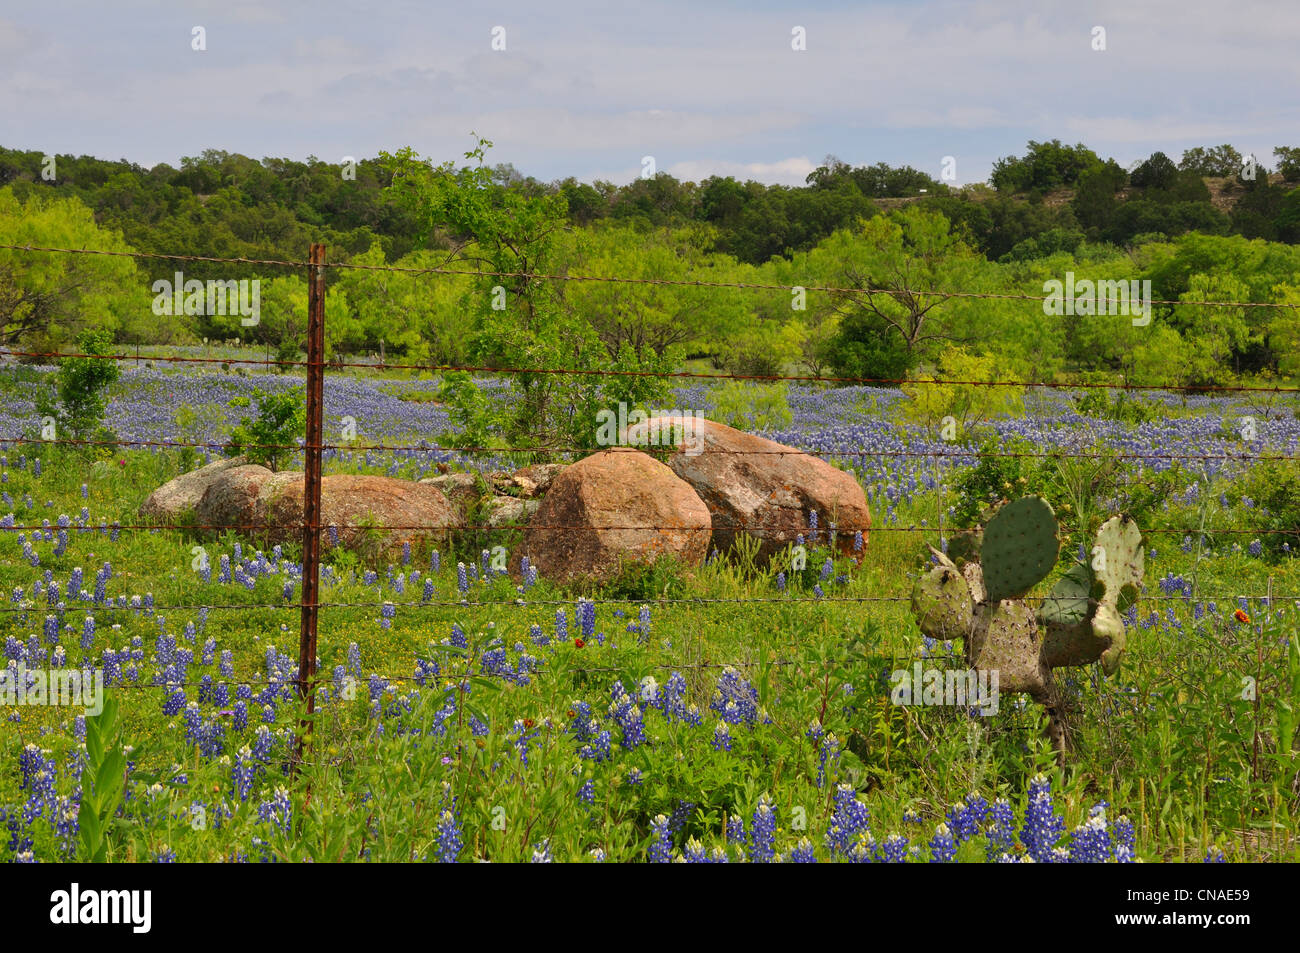 Bluebonnets in Texas, USA Stock Photo